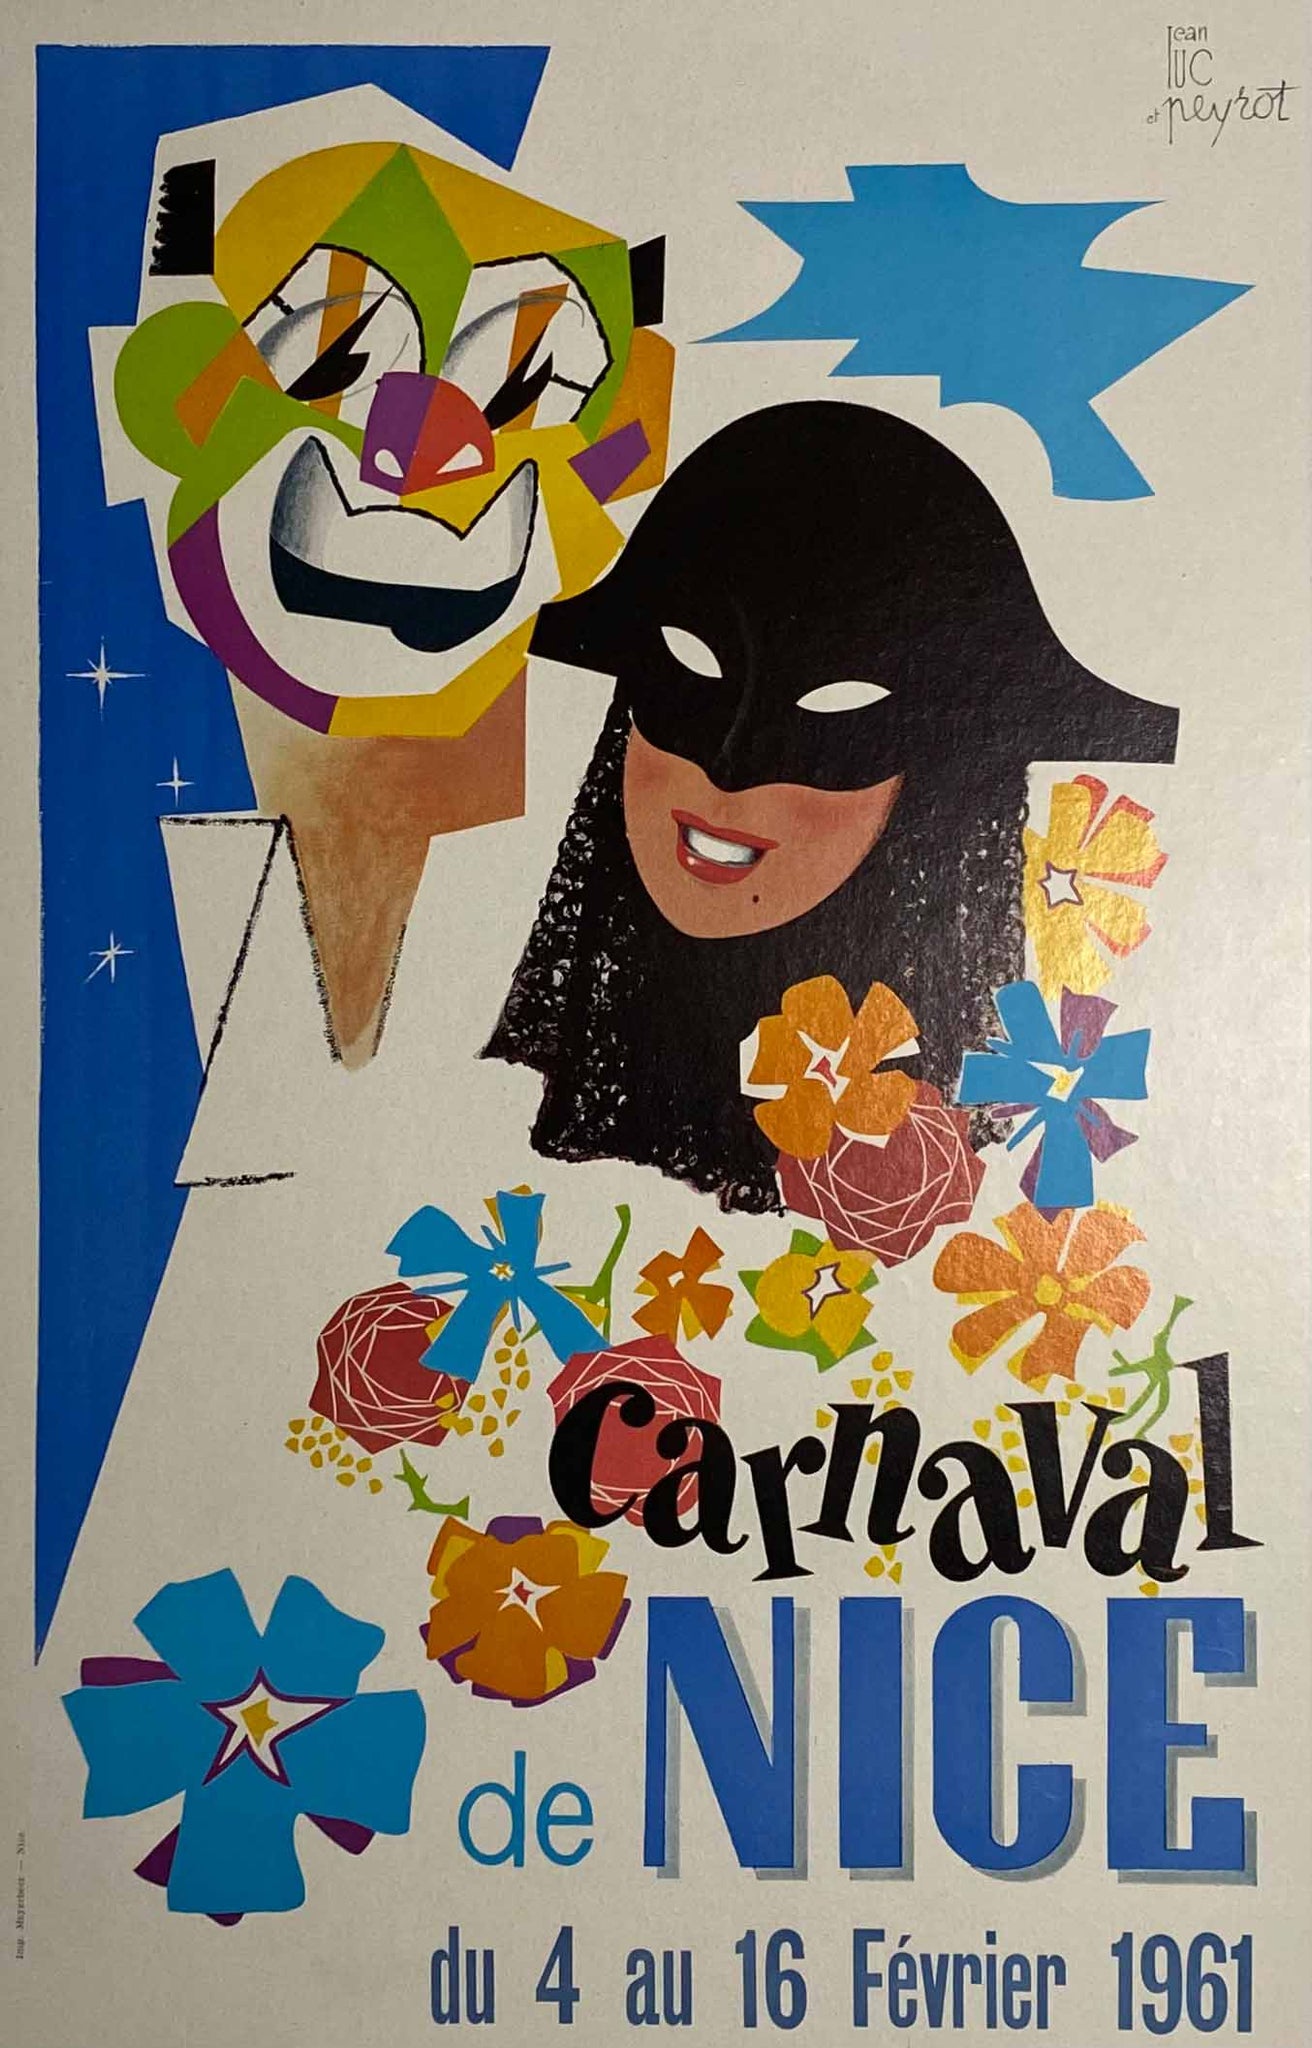 Affiche Originale Carnaval de Nice - Jean-Luc Peyrot 1961